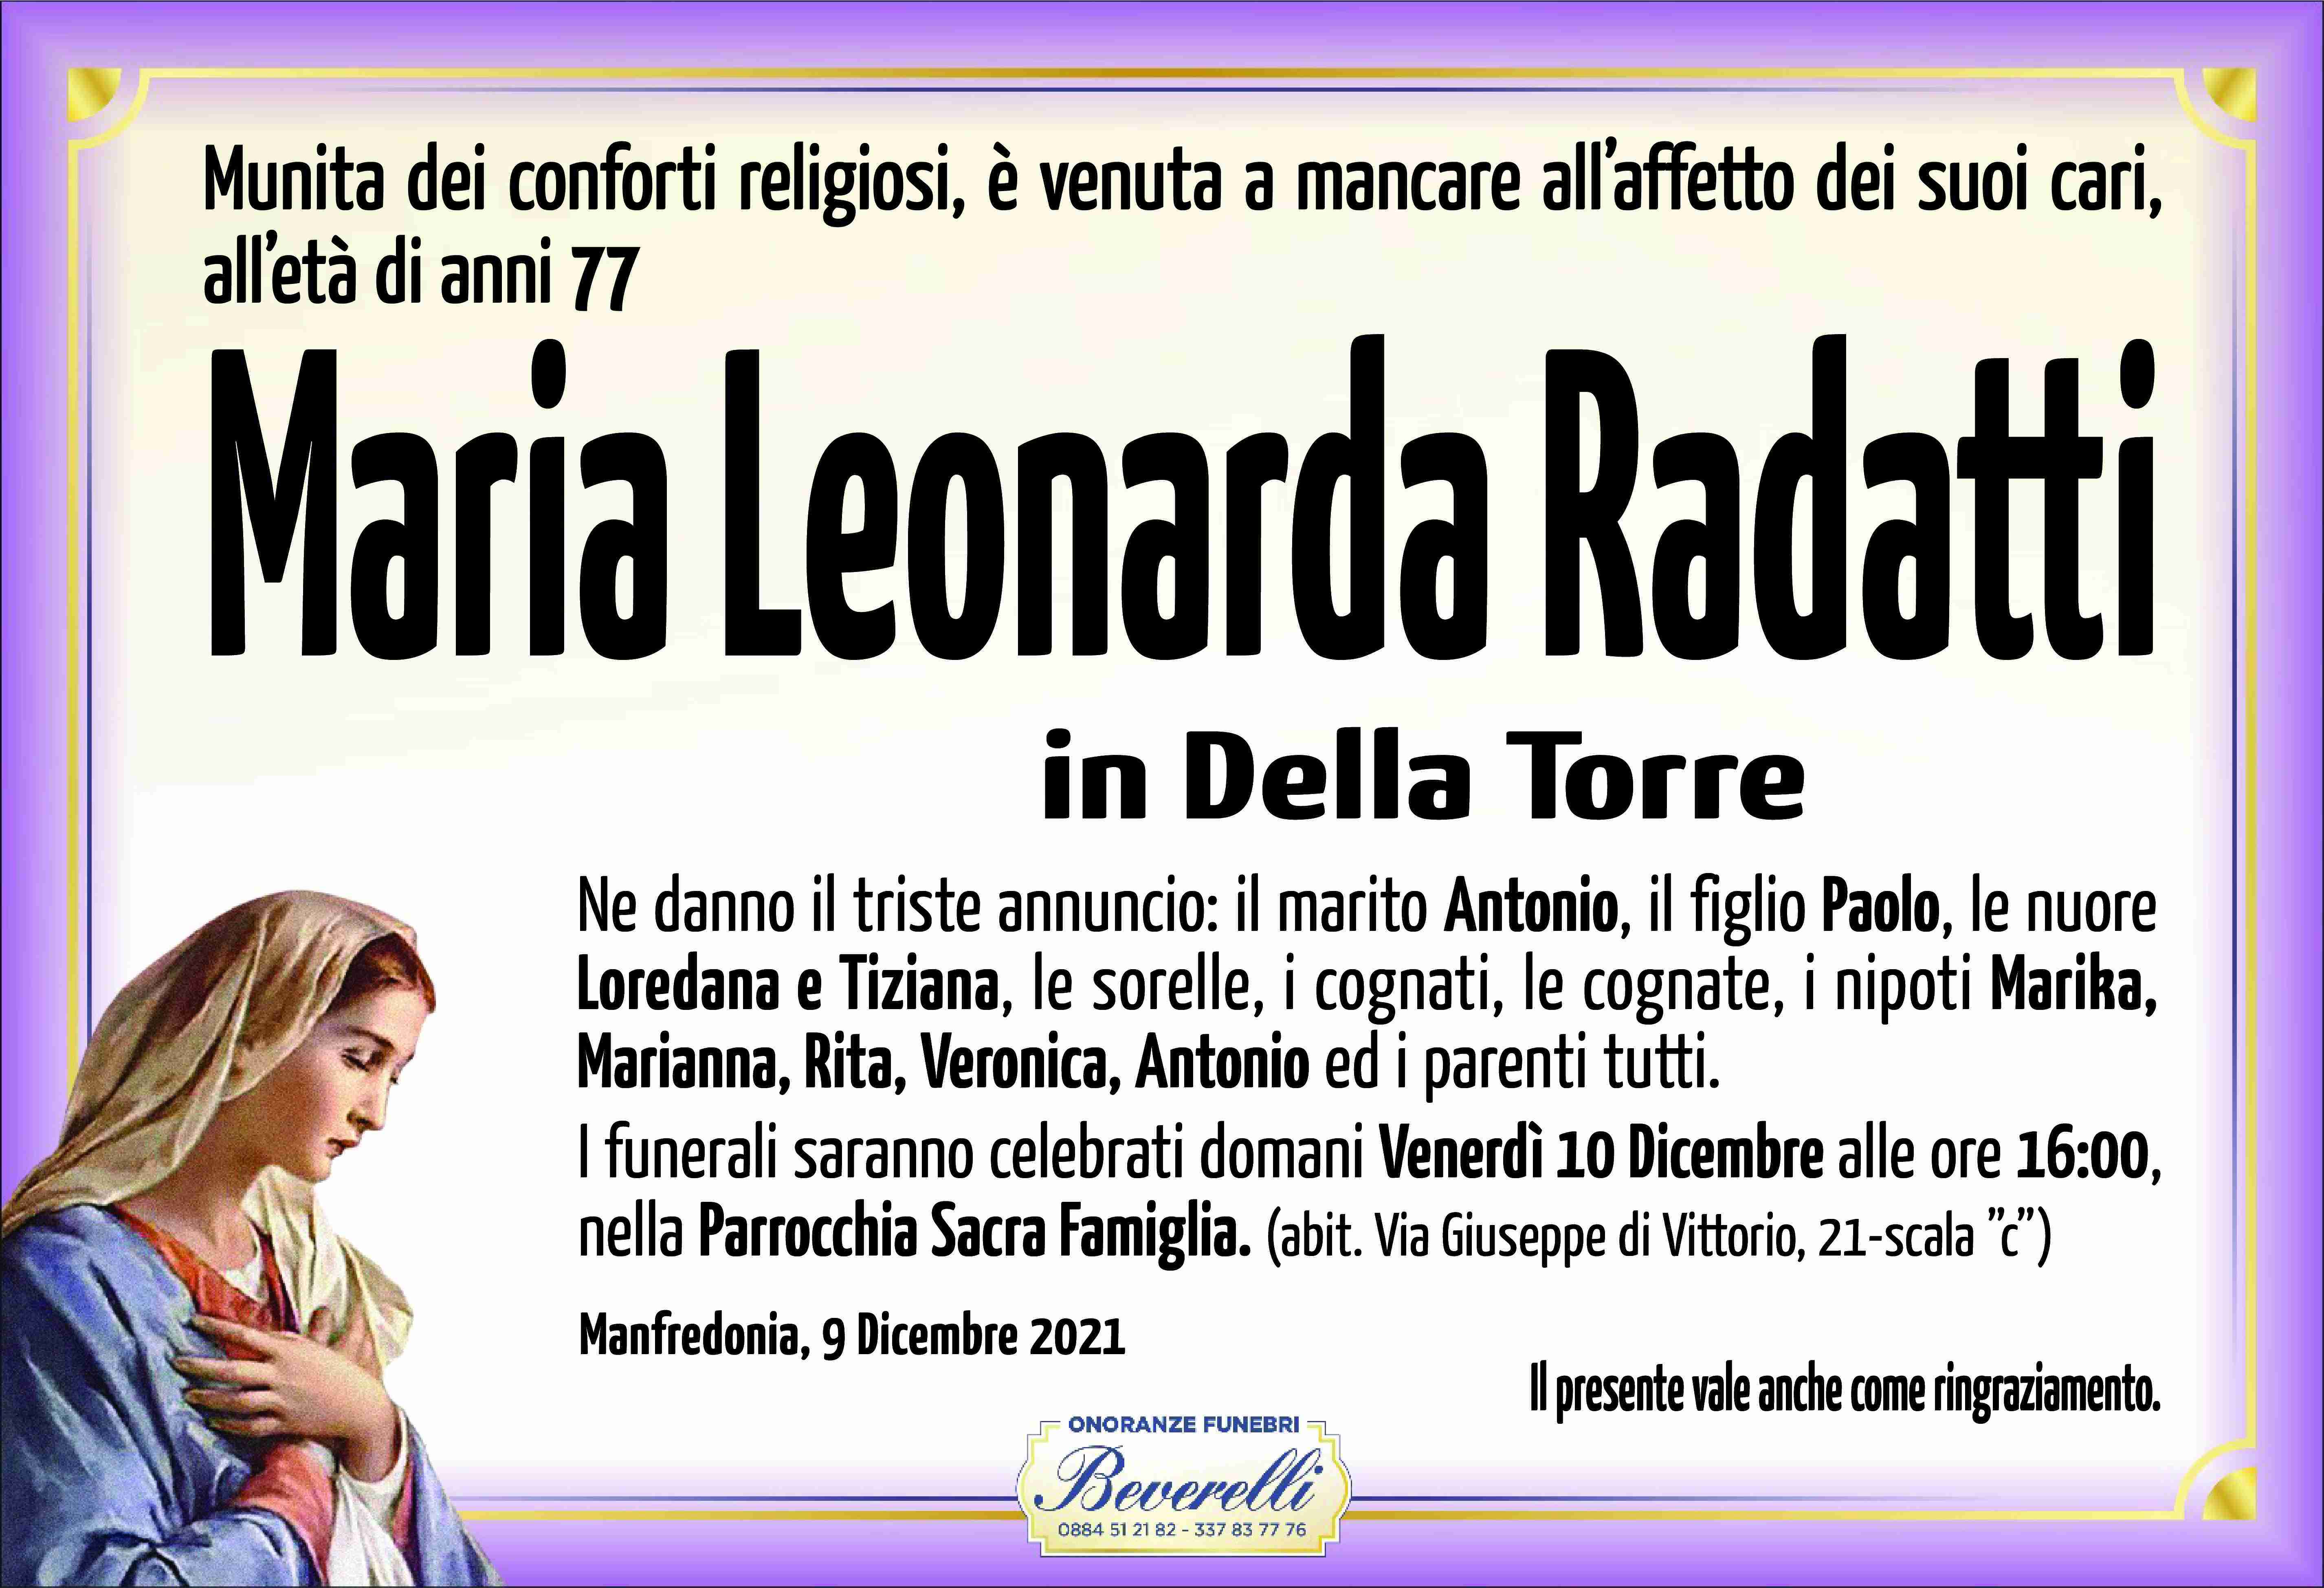 Maria Leonarda Radatti